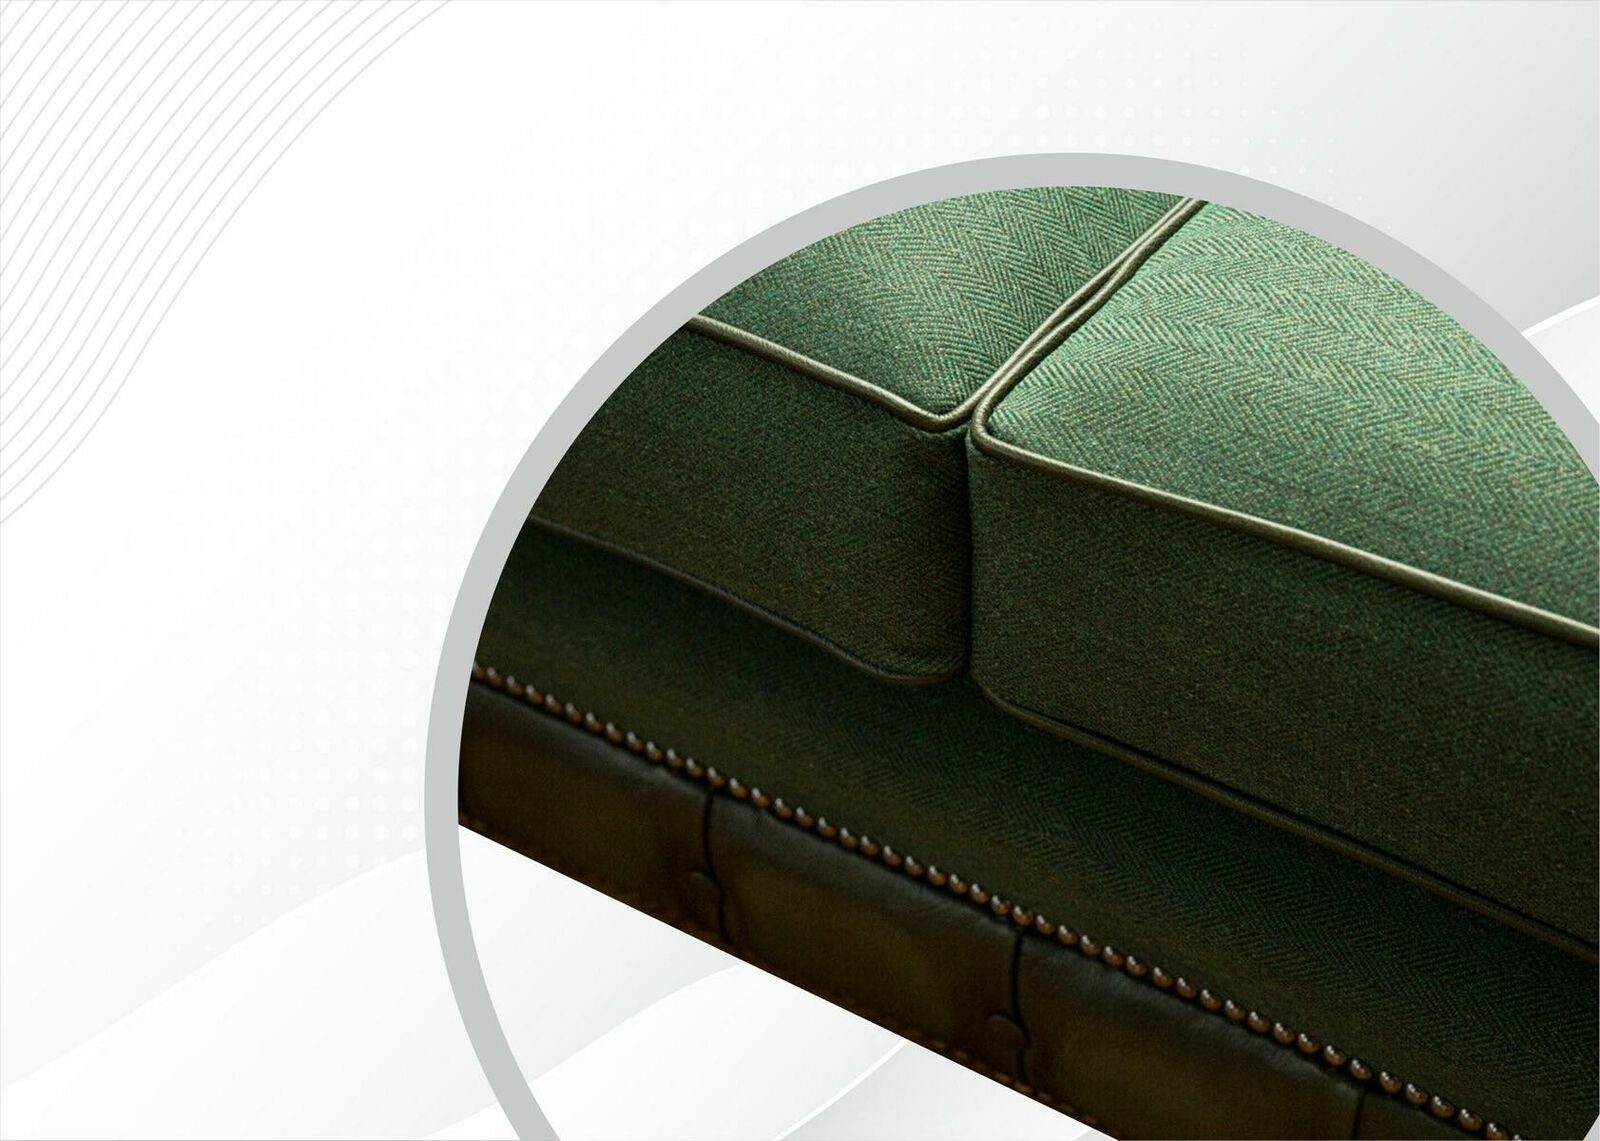 Neu, Couch Made Europe Luxus Chesterfield-Sofa 3-er Grüne JVmoebel Modernes Sofa Design Chesterfield in